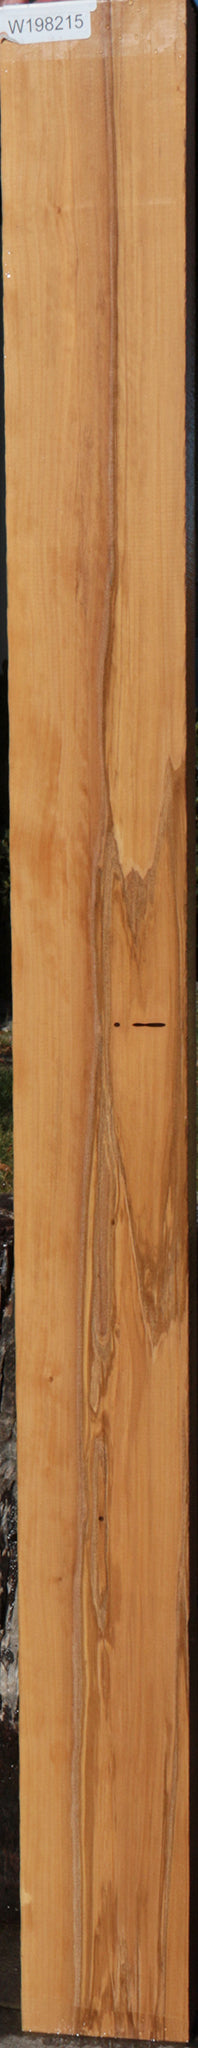 Castello Boxwood Lumber